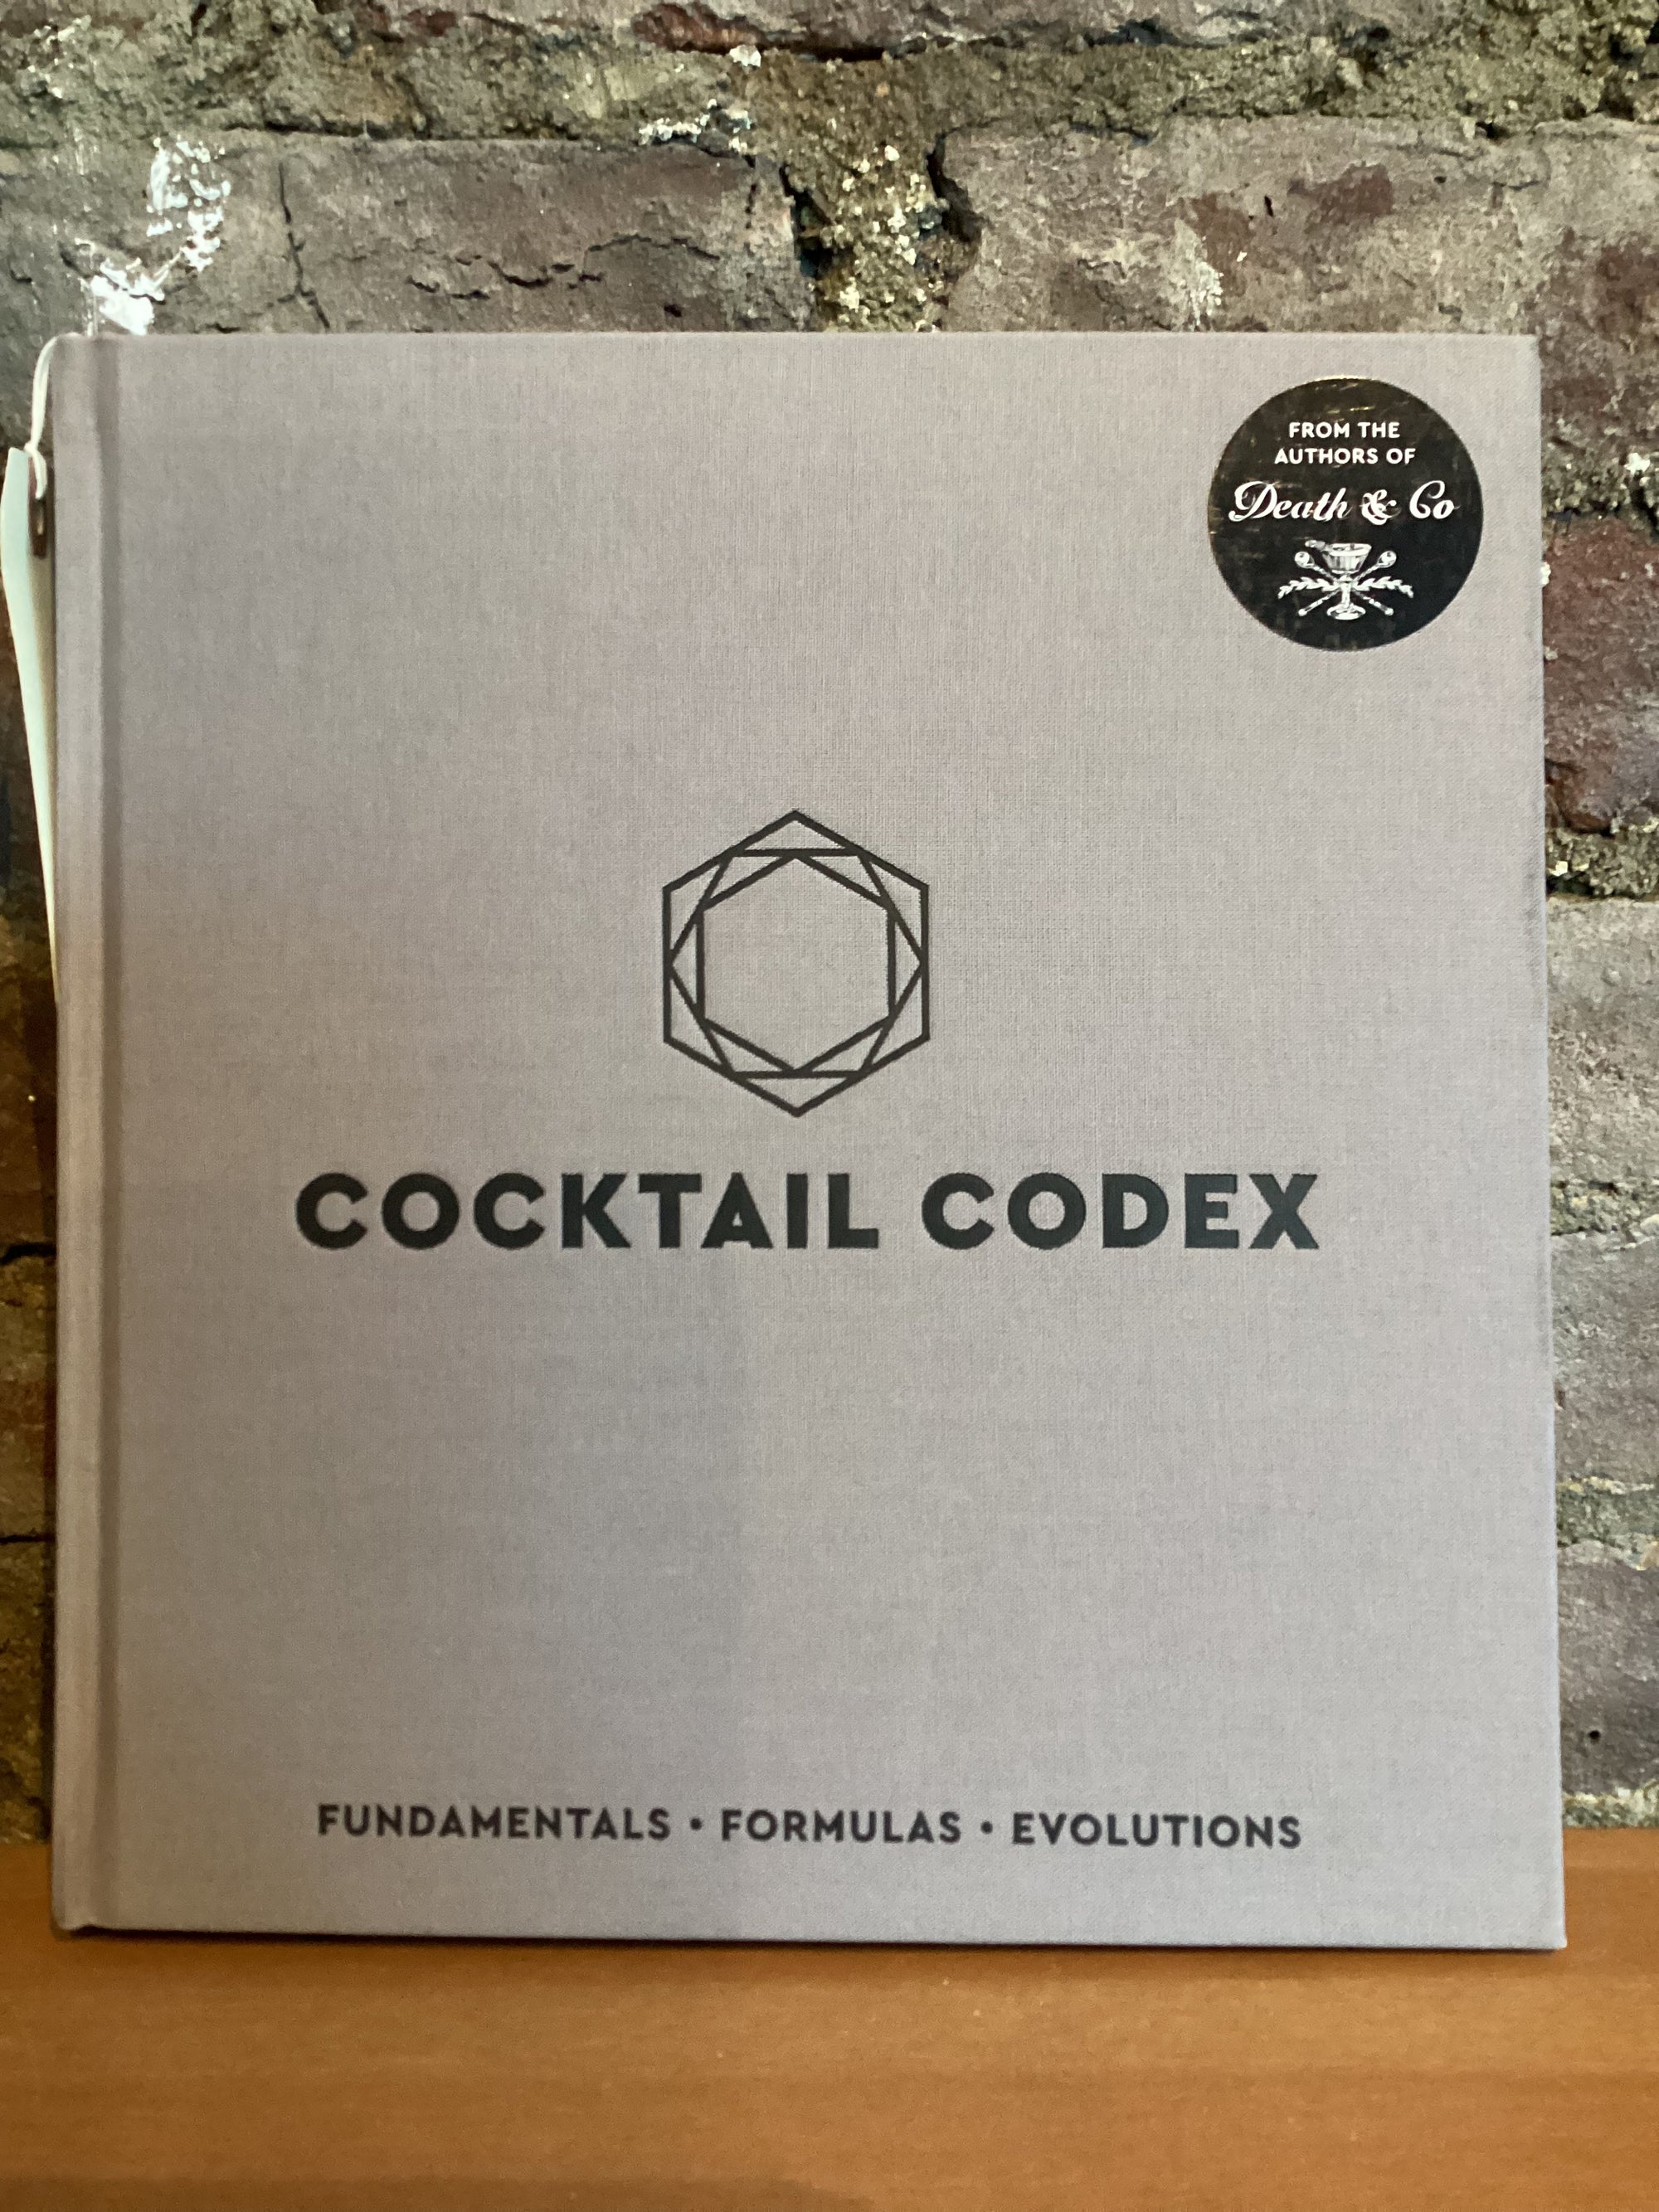 "The Cocktail Codex: Fundamentals - Formulas - Evolutions" by Alex Day, Nick Fauchald, & David Kaplan